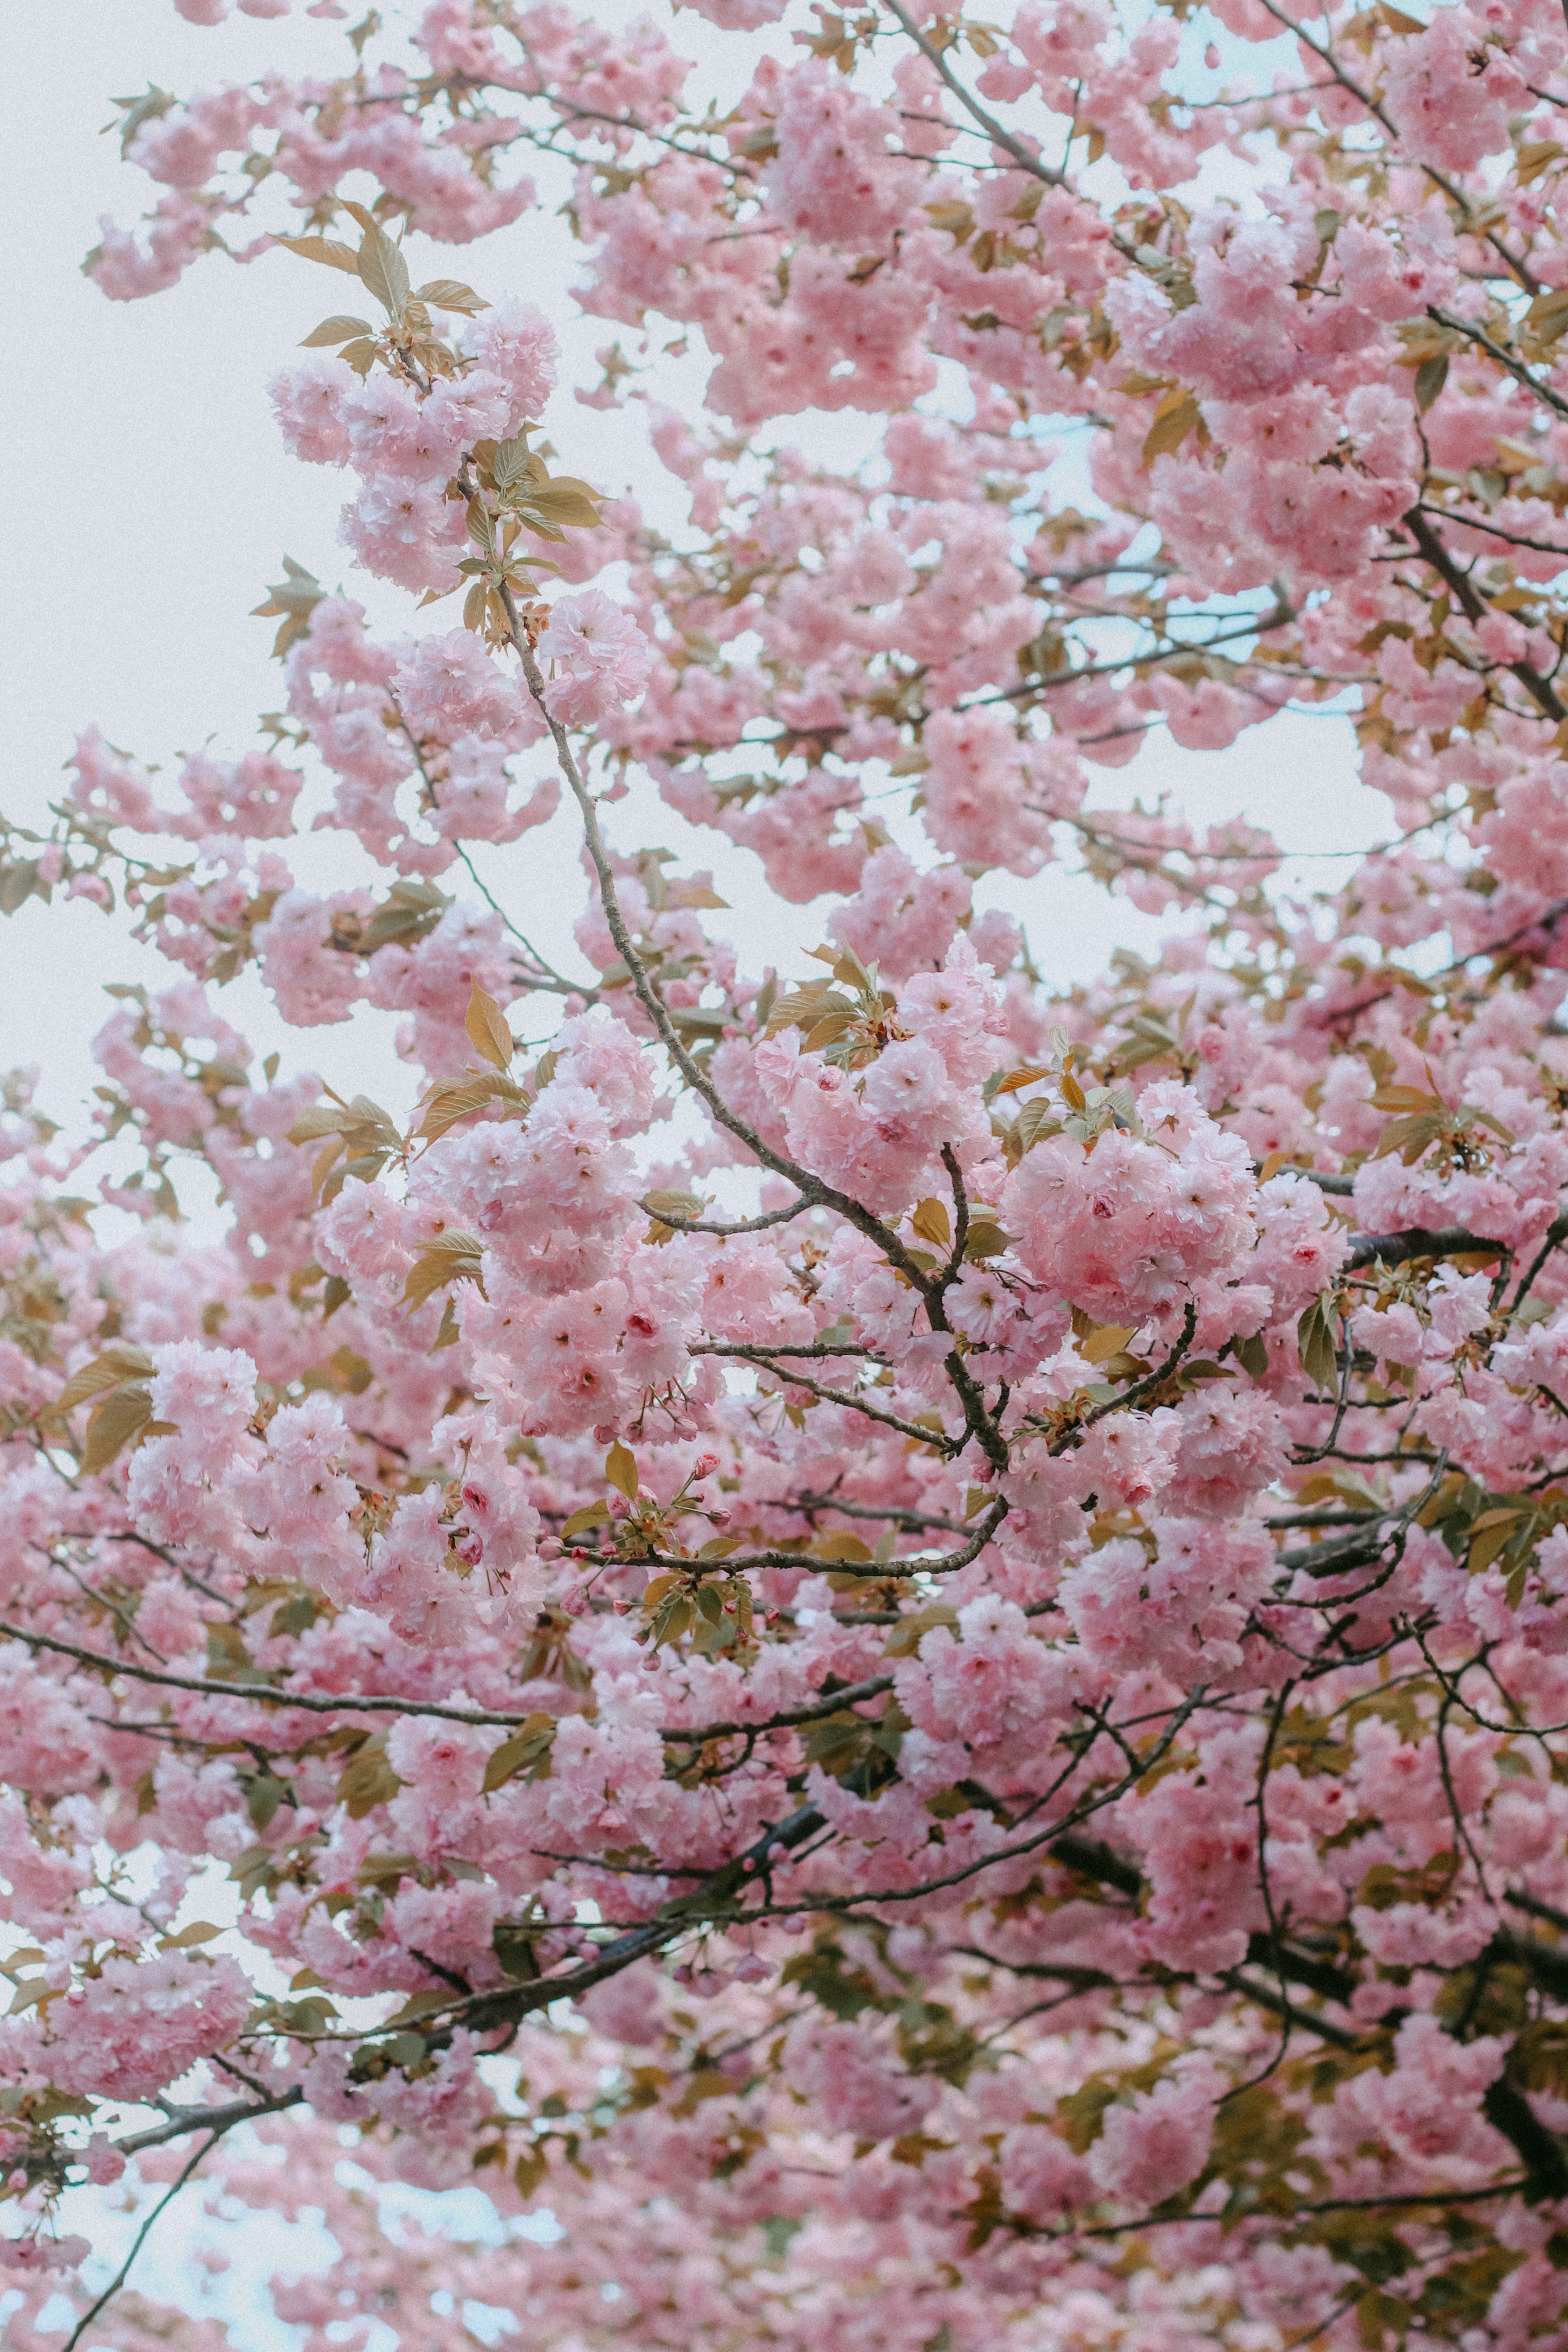 Best Cherry Blossom Wallpaper Photo · 100% Free Downloads